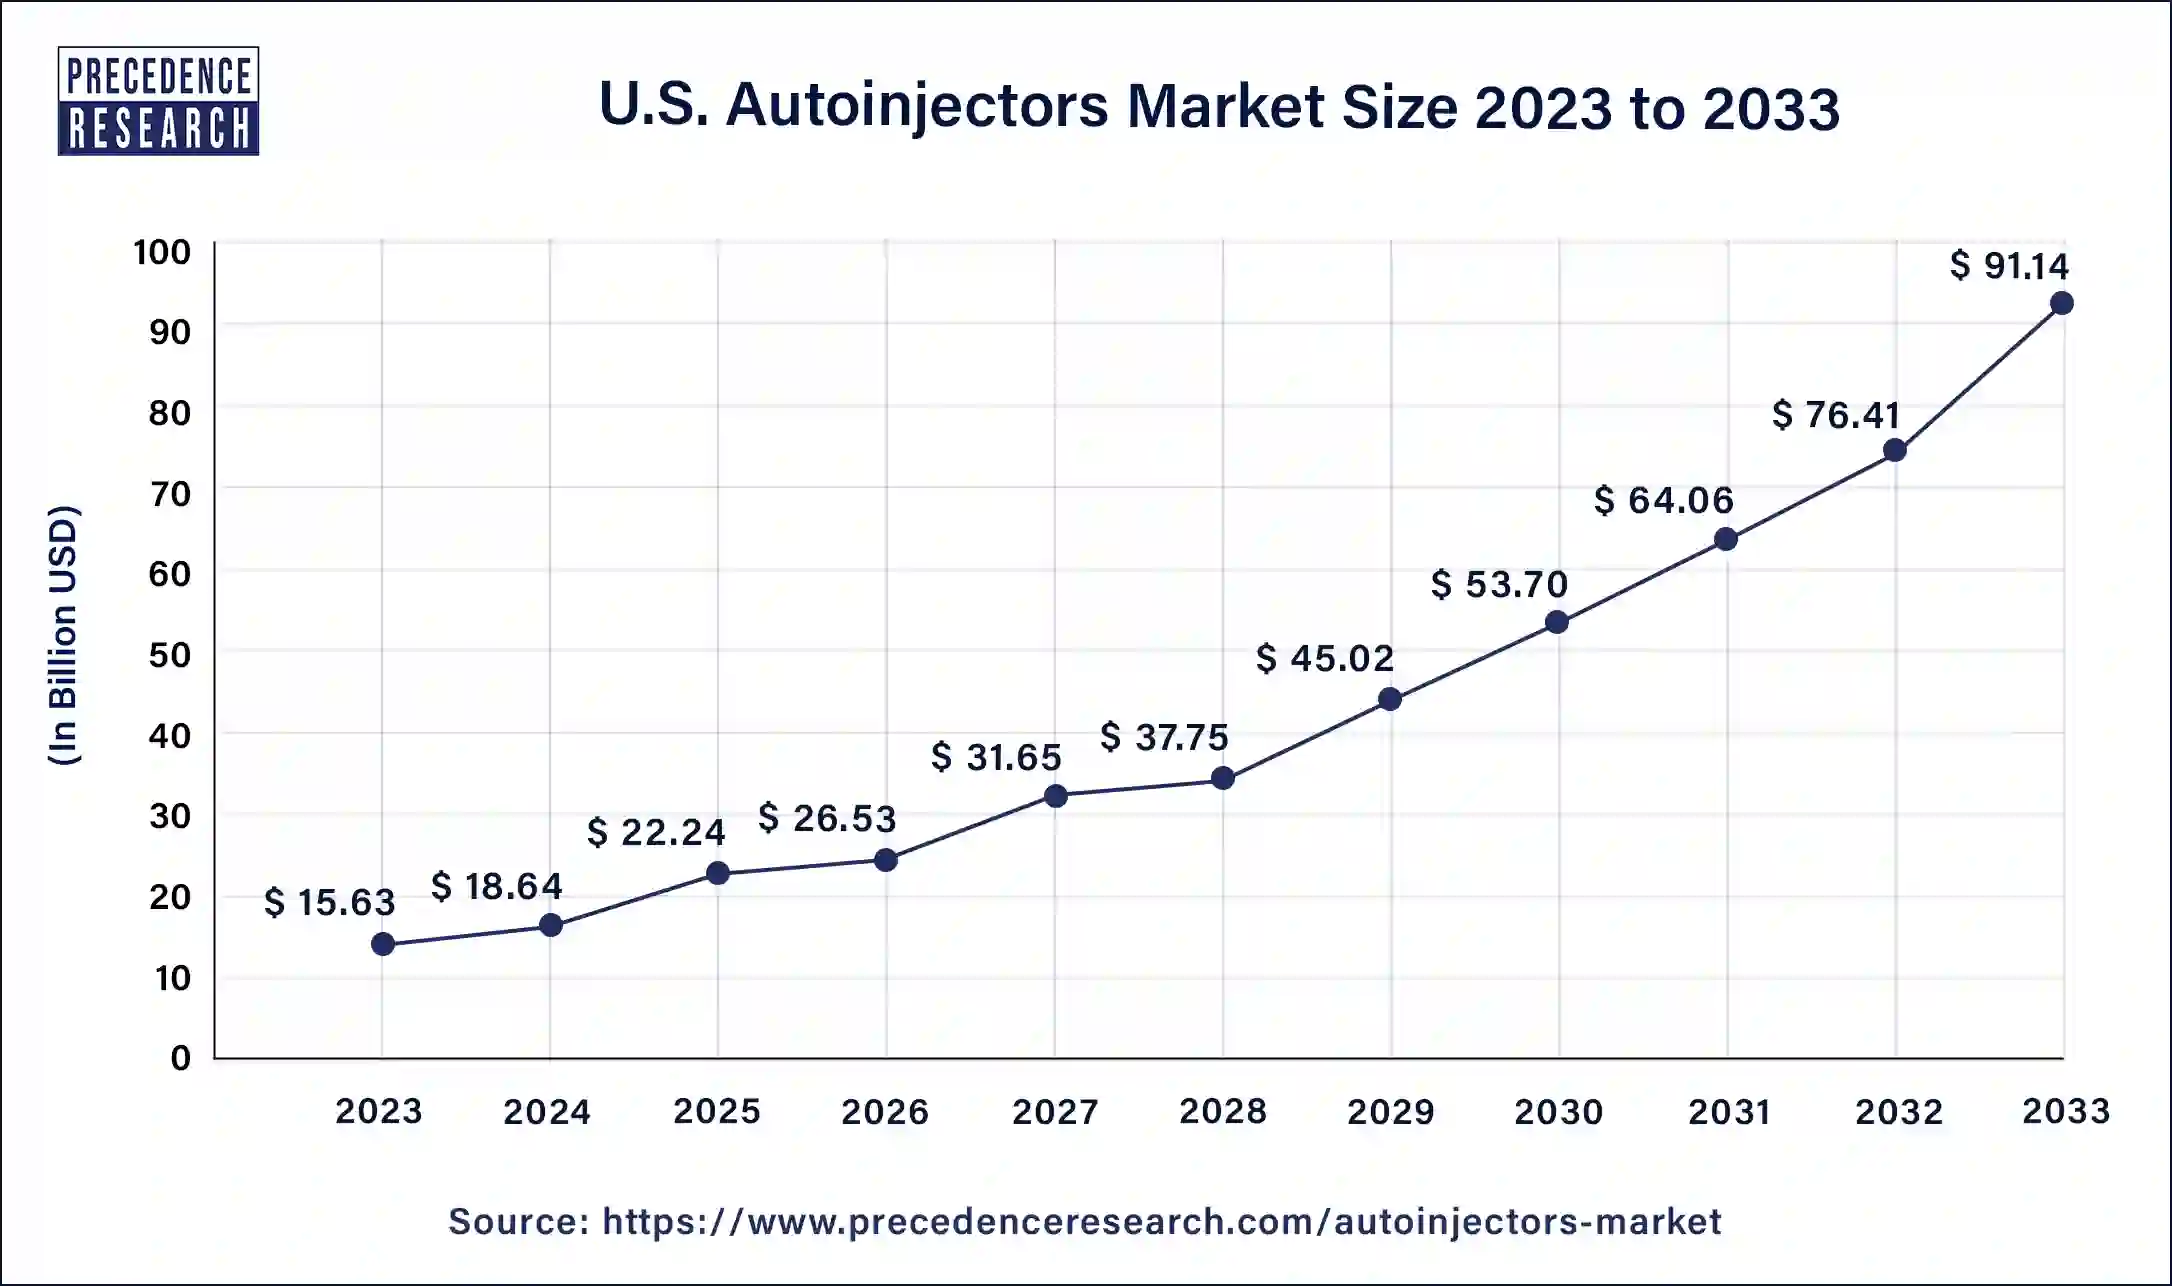 U.S. Autoinjectors Market Size 2024 to 2033